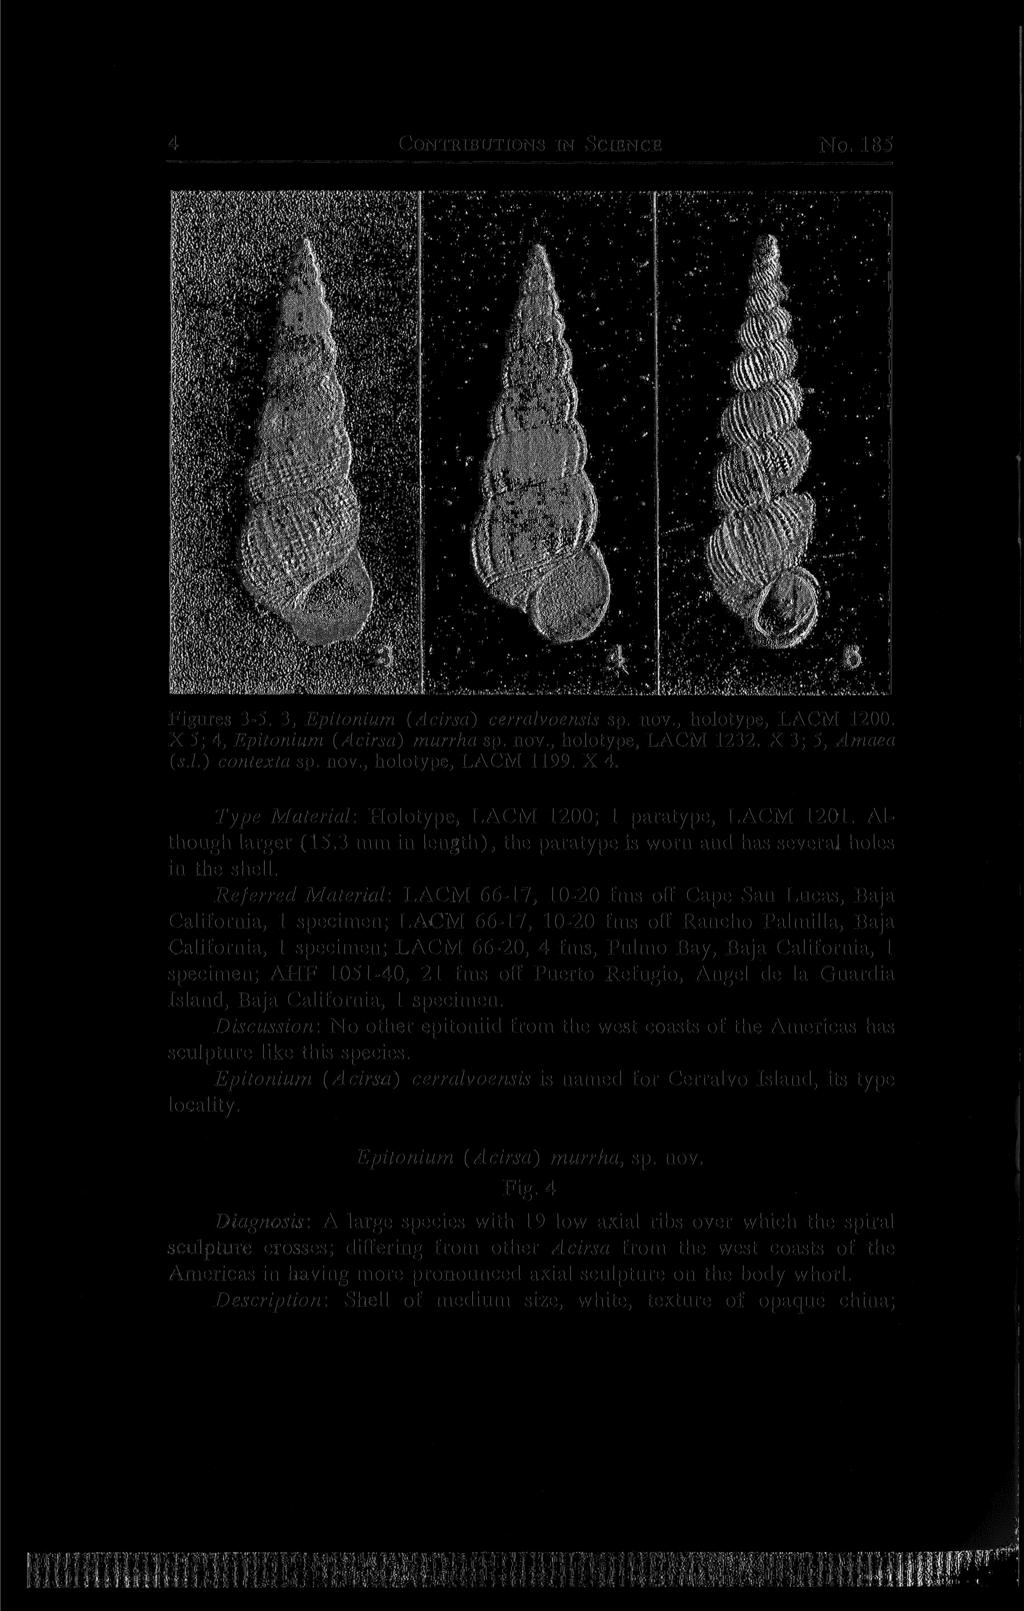 4 CONTRIBUTIONS IN SCIENCE No. 185 Figures 3-5. 3, Epitonium {Acirsa) cerralvoensis sp. nov., holotype, LACM 1200. X 5; 4, Epitonium {Acirsa) murrha sp. nov., holotype, LACM 1232. X 3; 5, Amaea {s.l.) contexta sp.